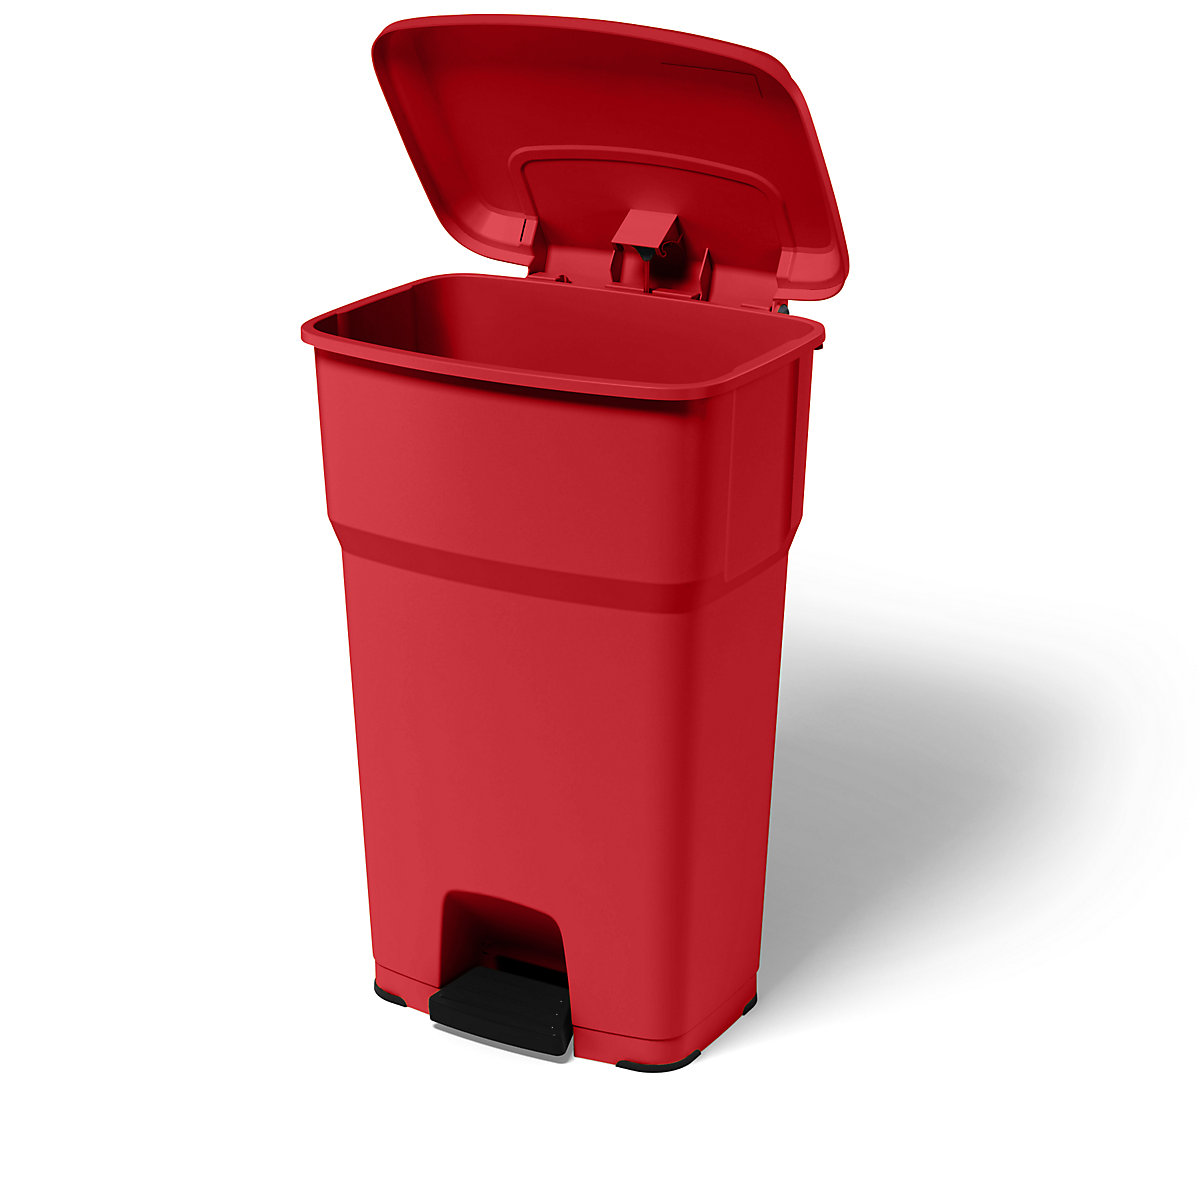 Coletor de lixo com pedal HERA – rothopro, volume 85 l, LxAxP 490 x 790 x 390 mm, vermelho-9